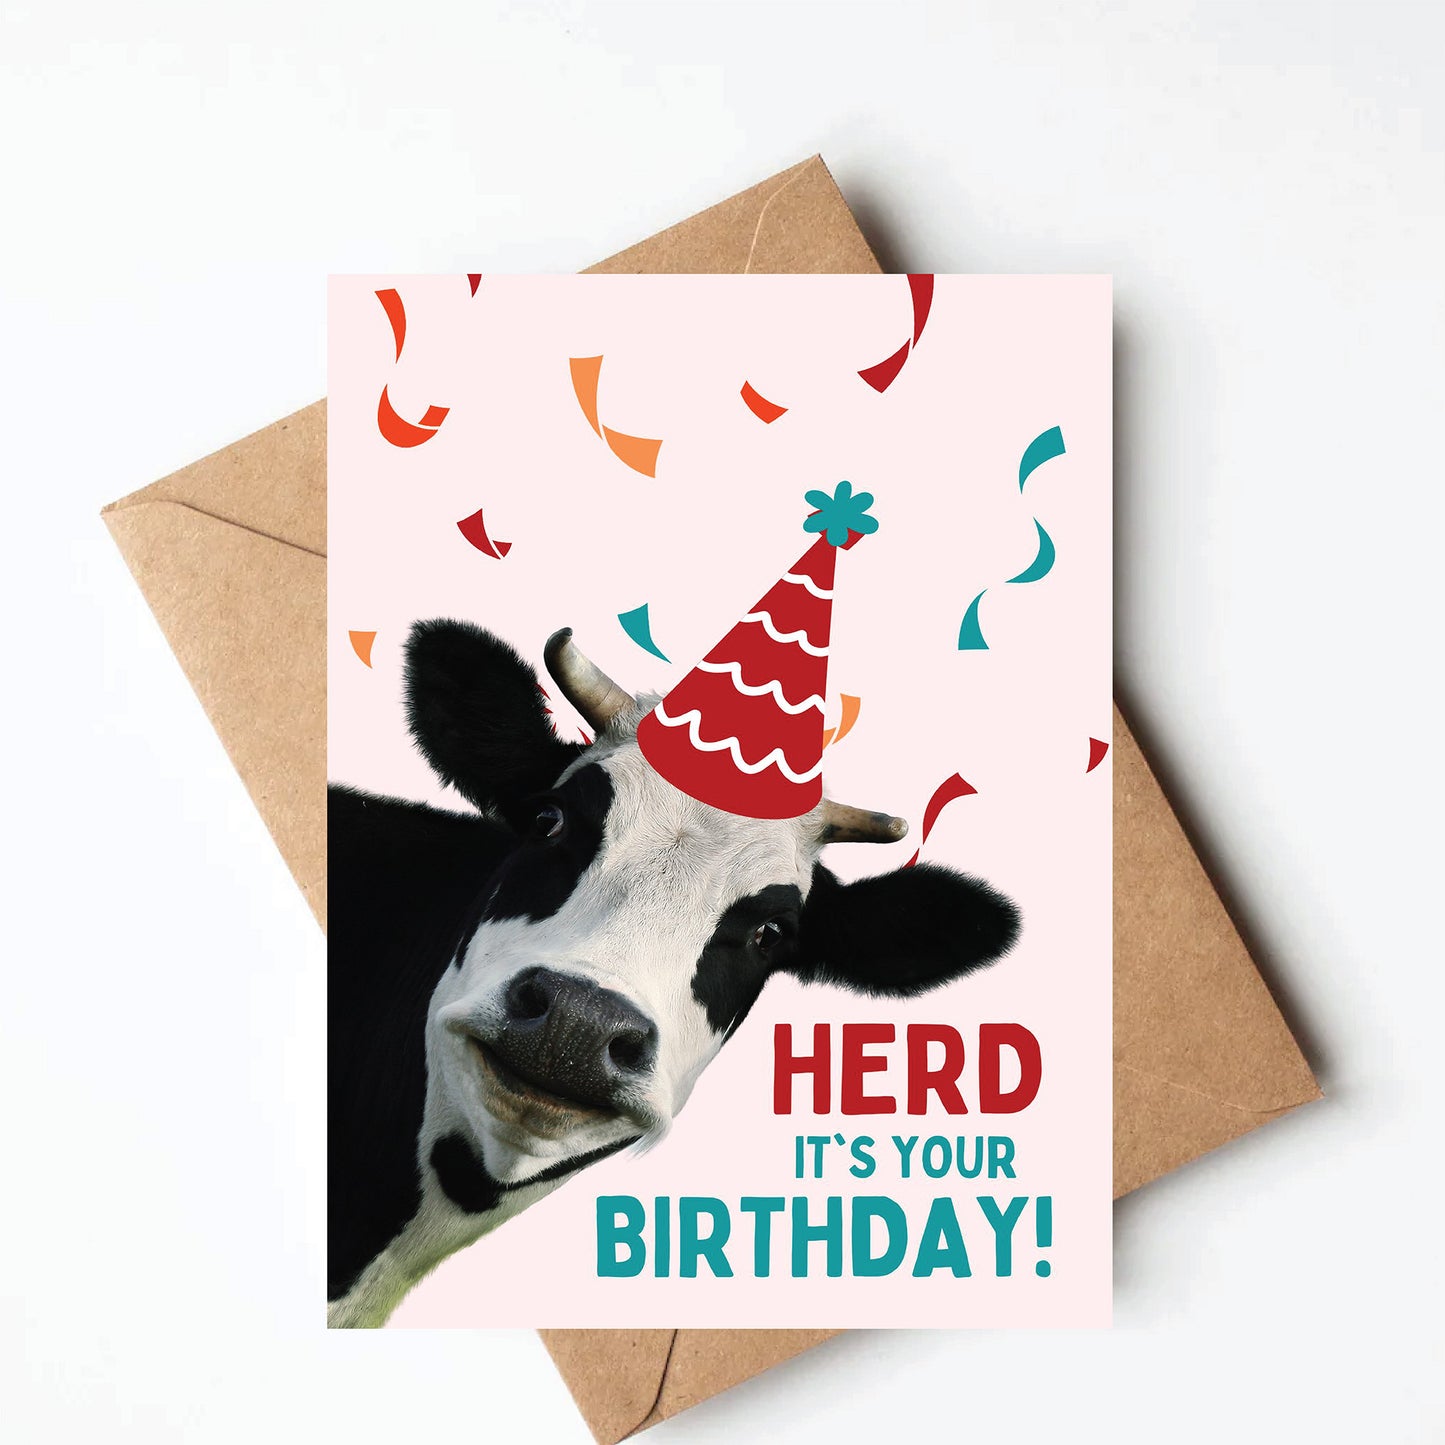 Cow birthday card